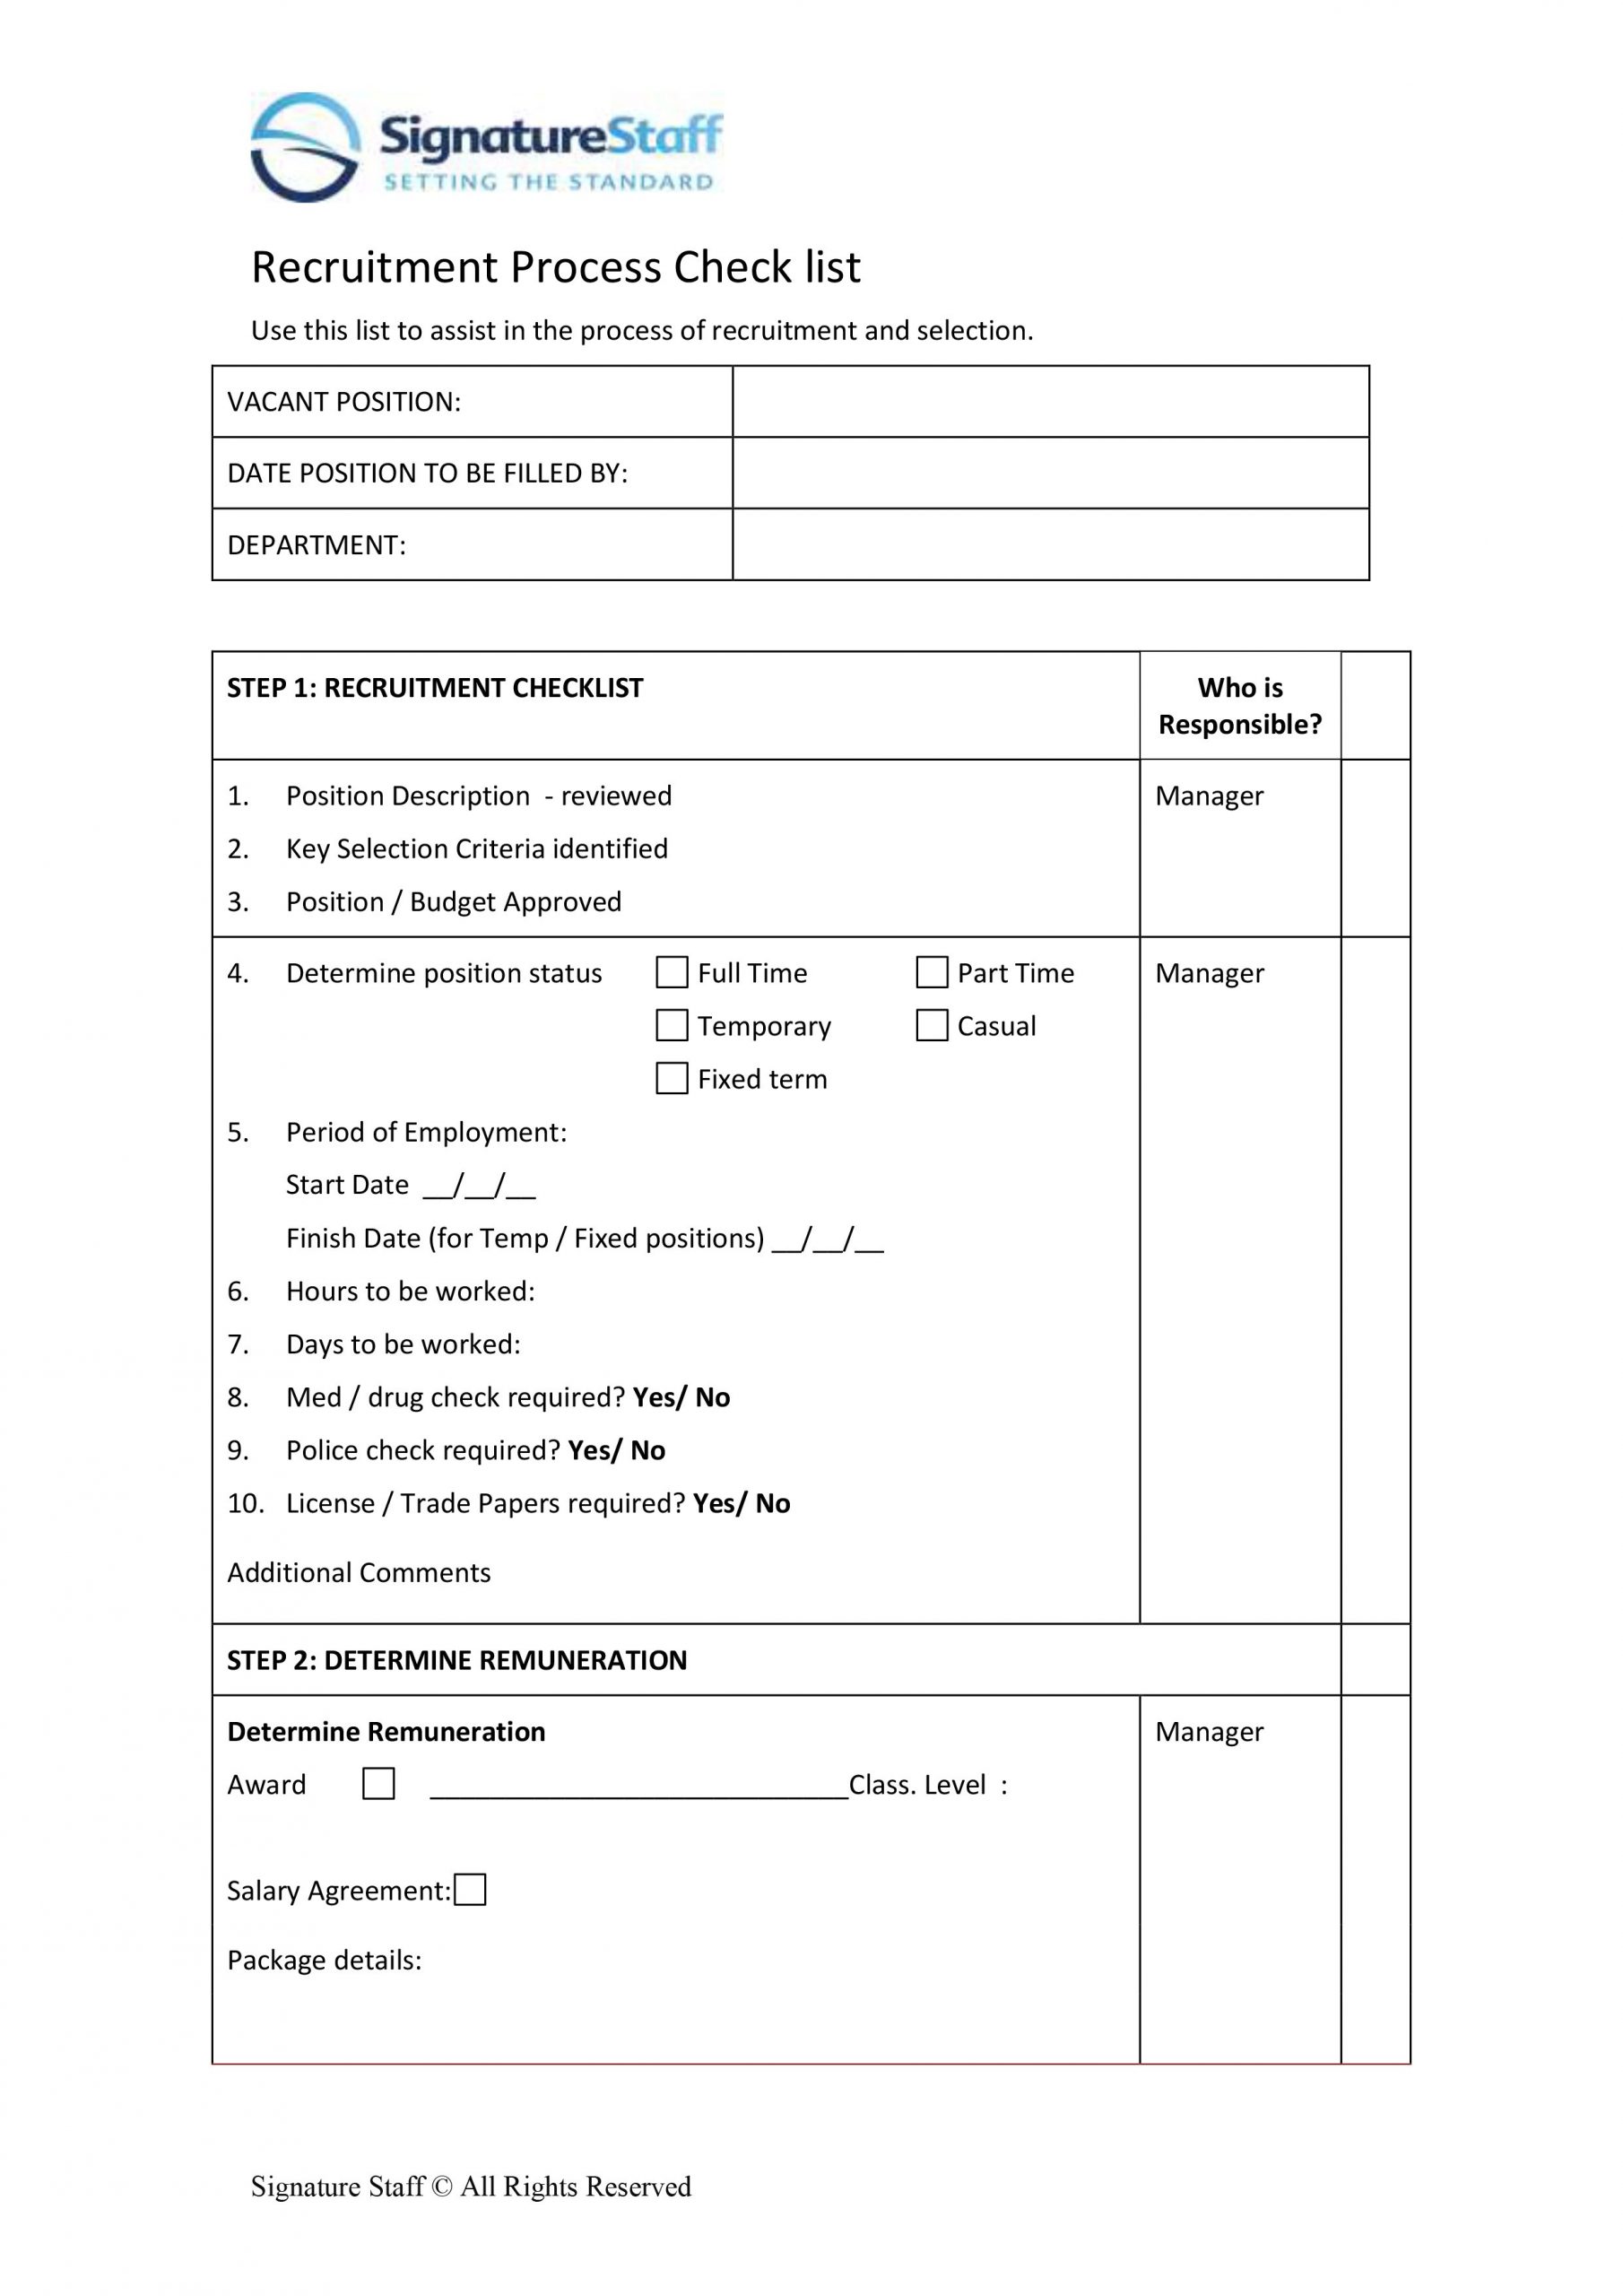 checklist template with signature
 Recruitment Process Checklist - Signature Staff - checklist template with signature